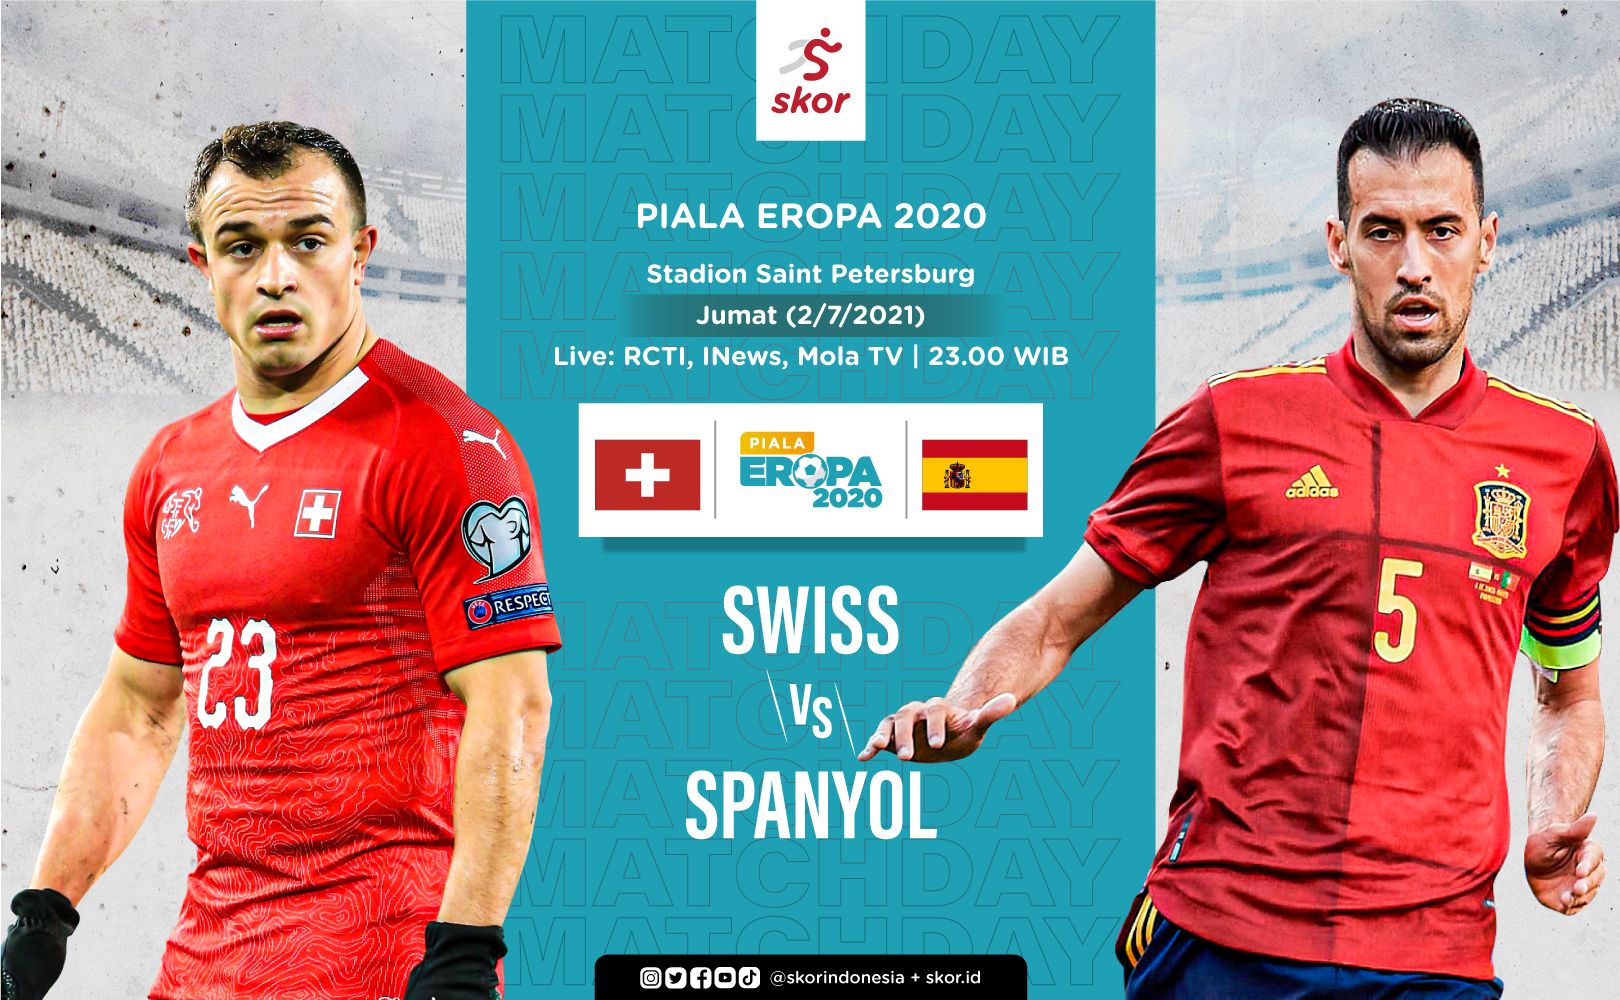 Swiss vs spanyol